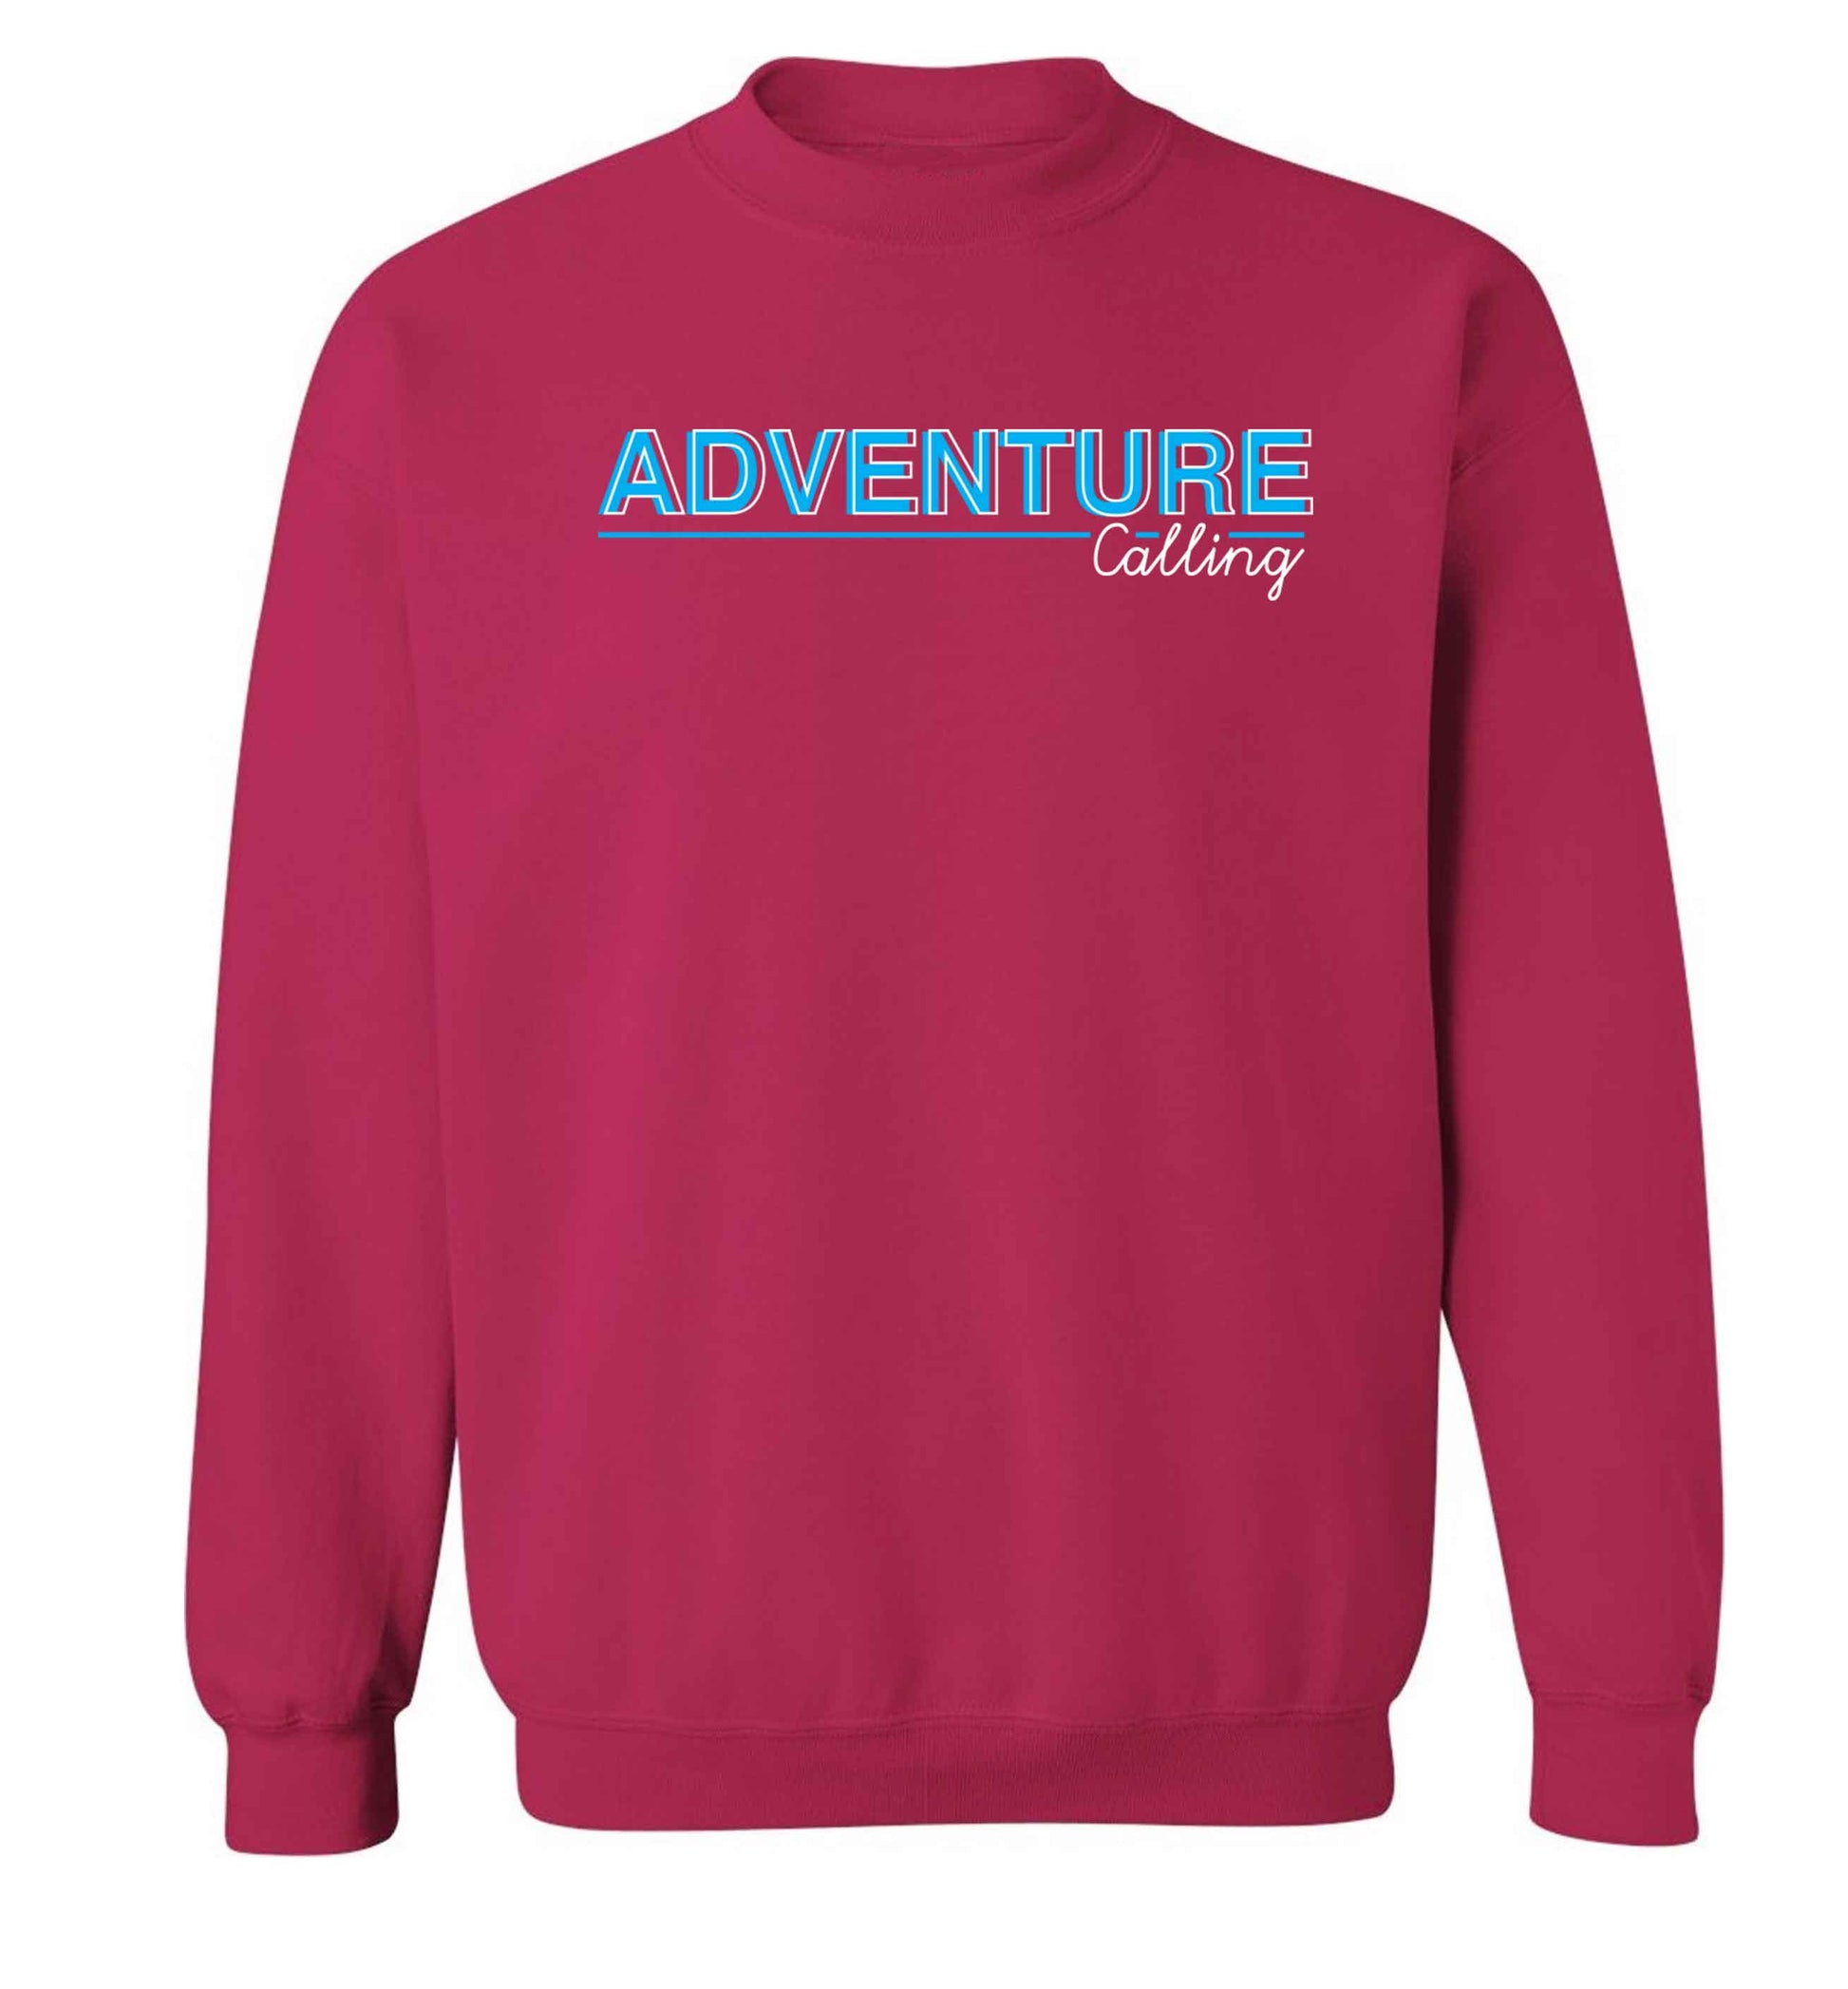 Adventure calling Adult's unisex pink Sweater 2XL